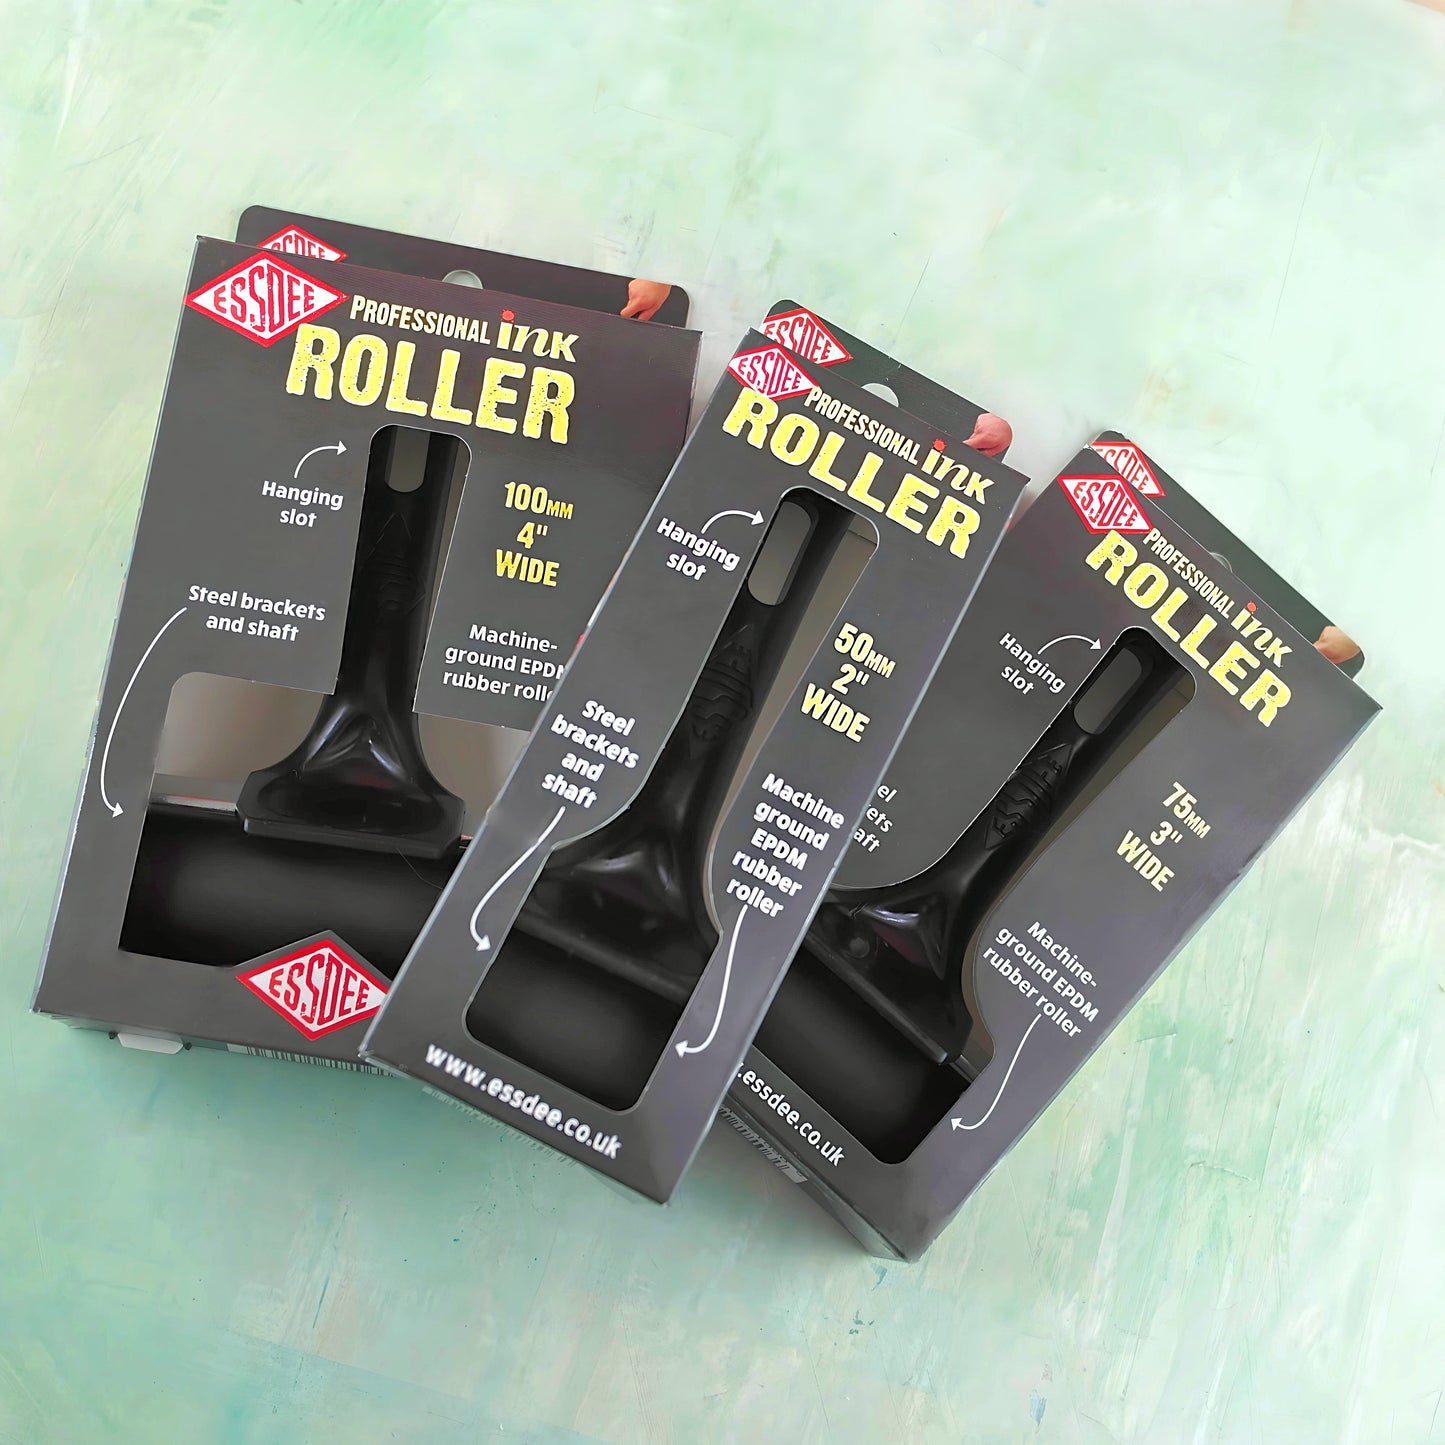 Artist quality rubber roller by Essdee UK